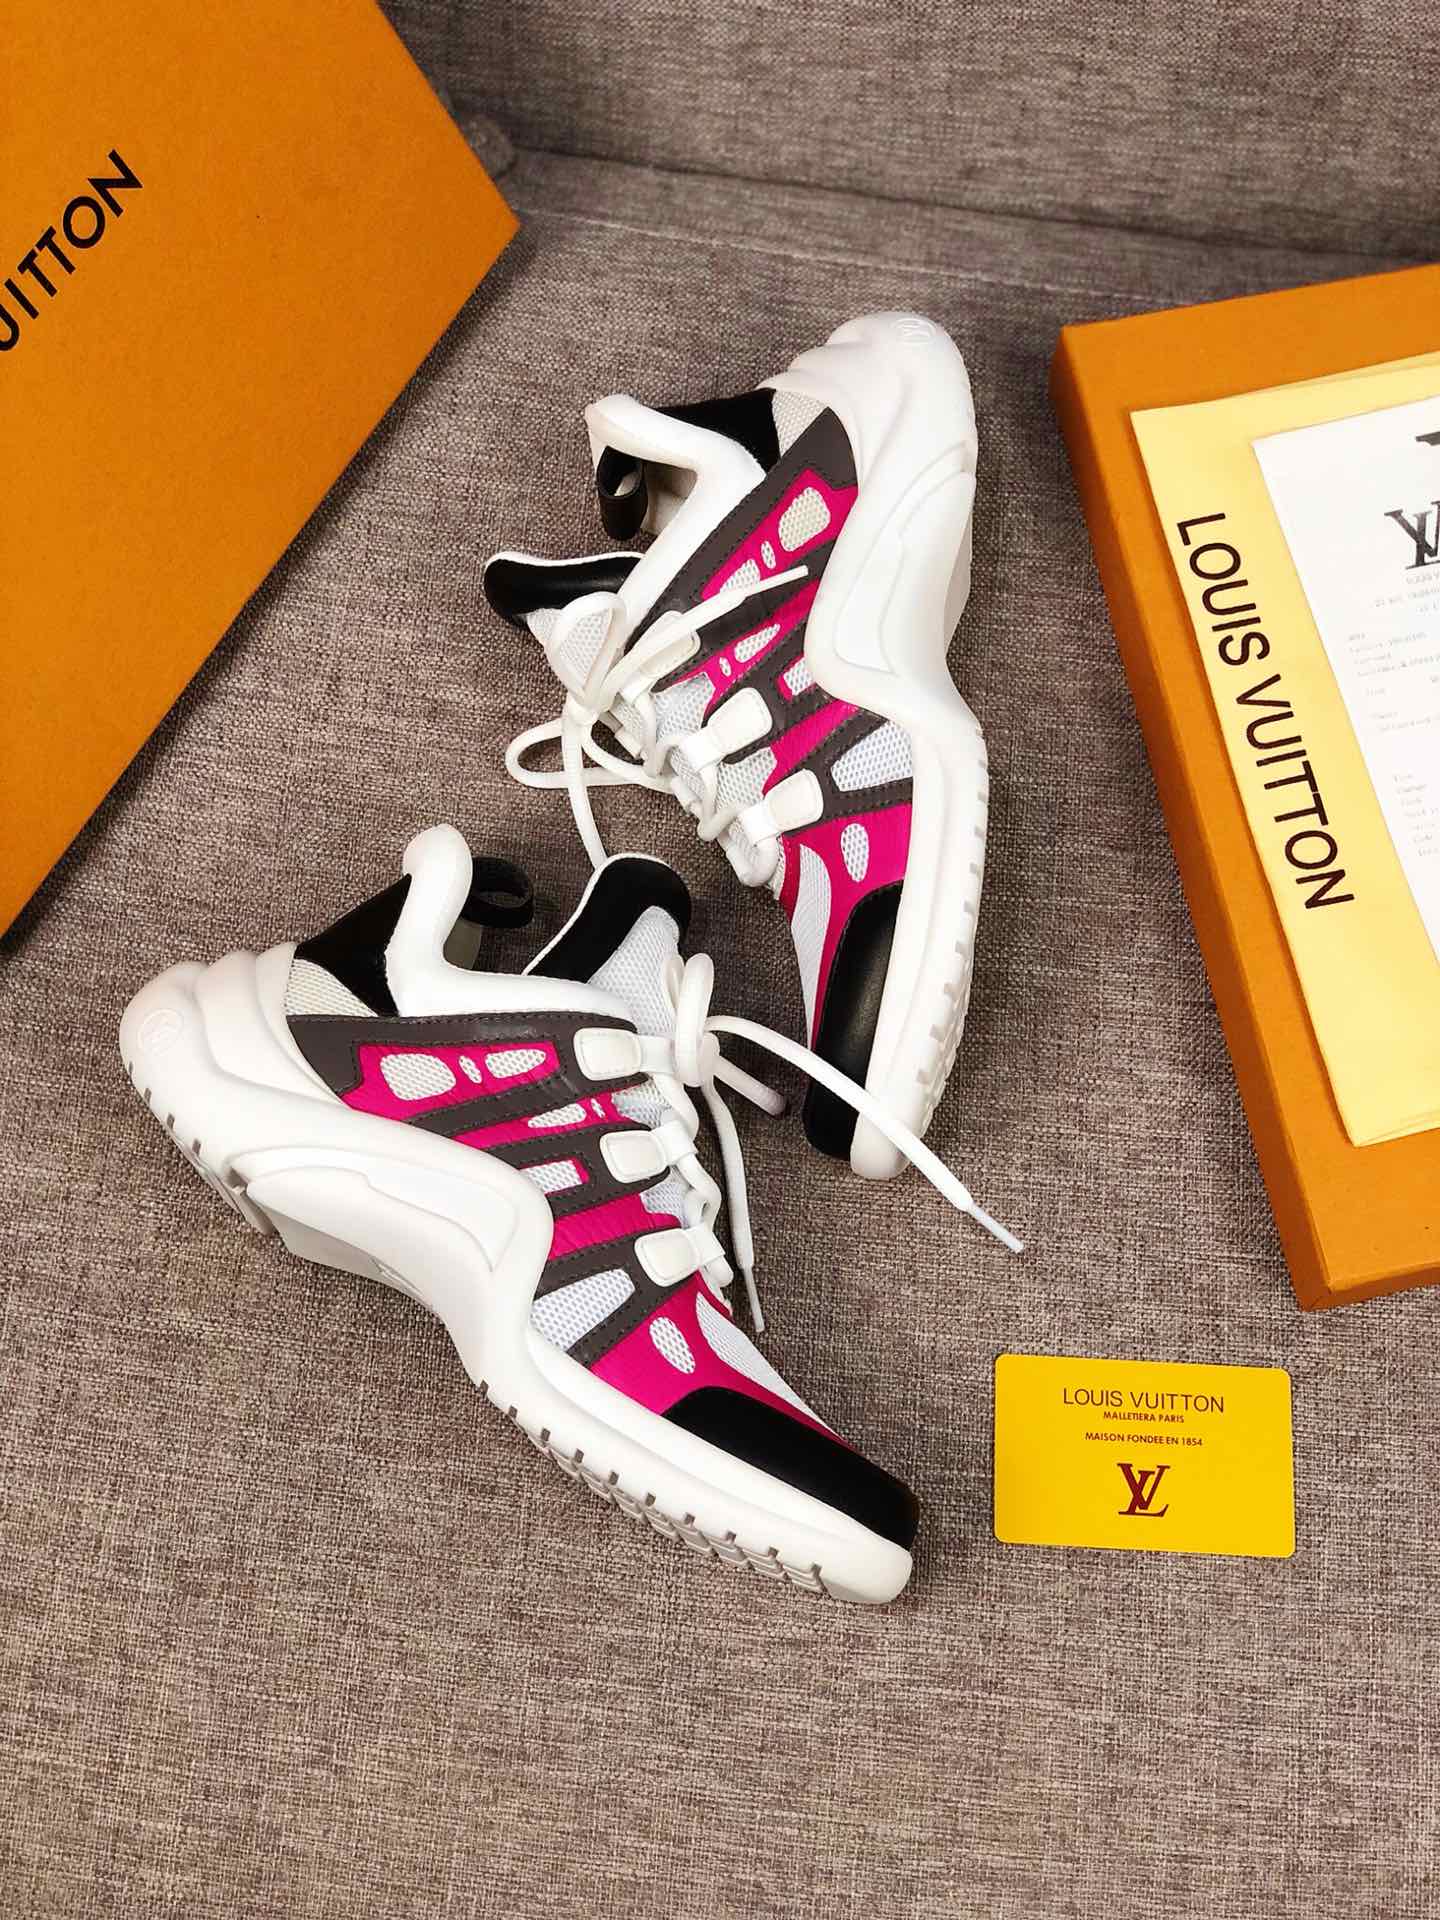 VO - LUV Archlight Pink White Black Sneaker